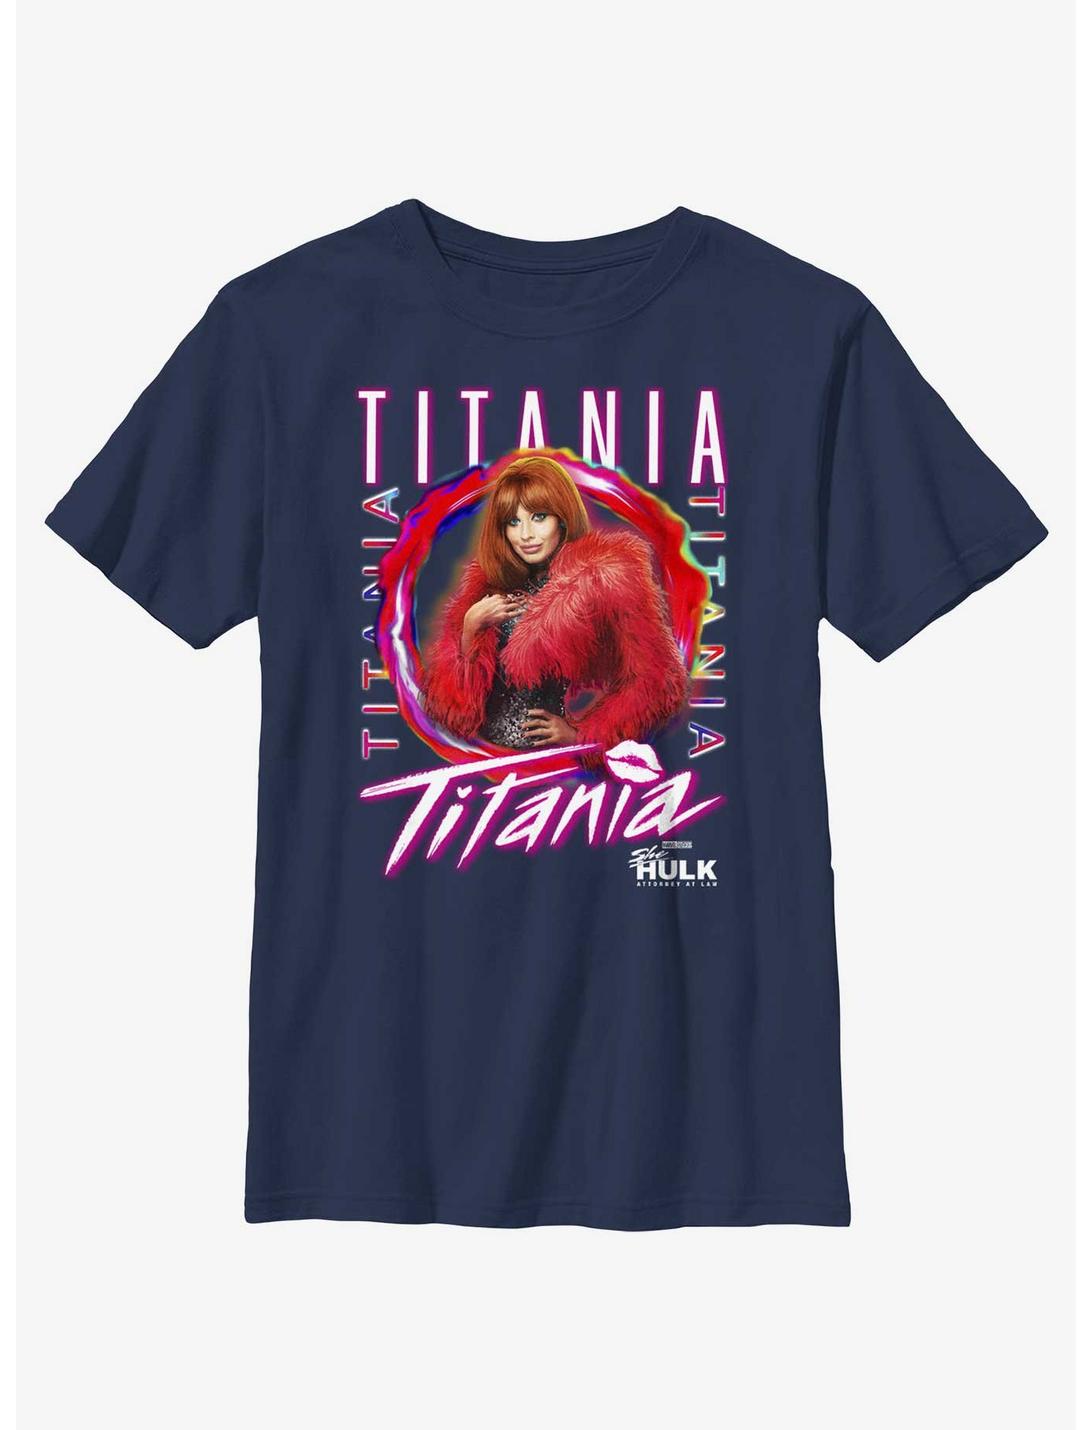 Marvel She-Hulk Titania Poster Youth T-Shirt, NAVY, hi-res